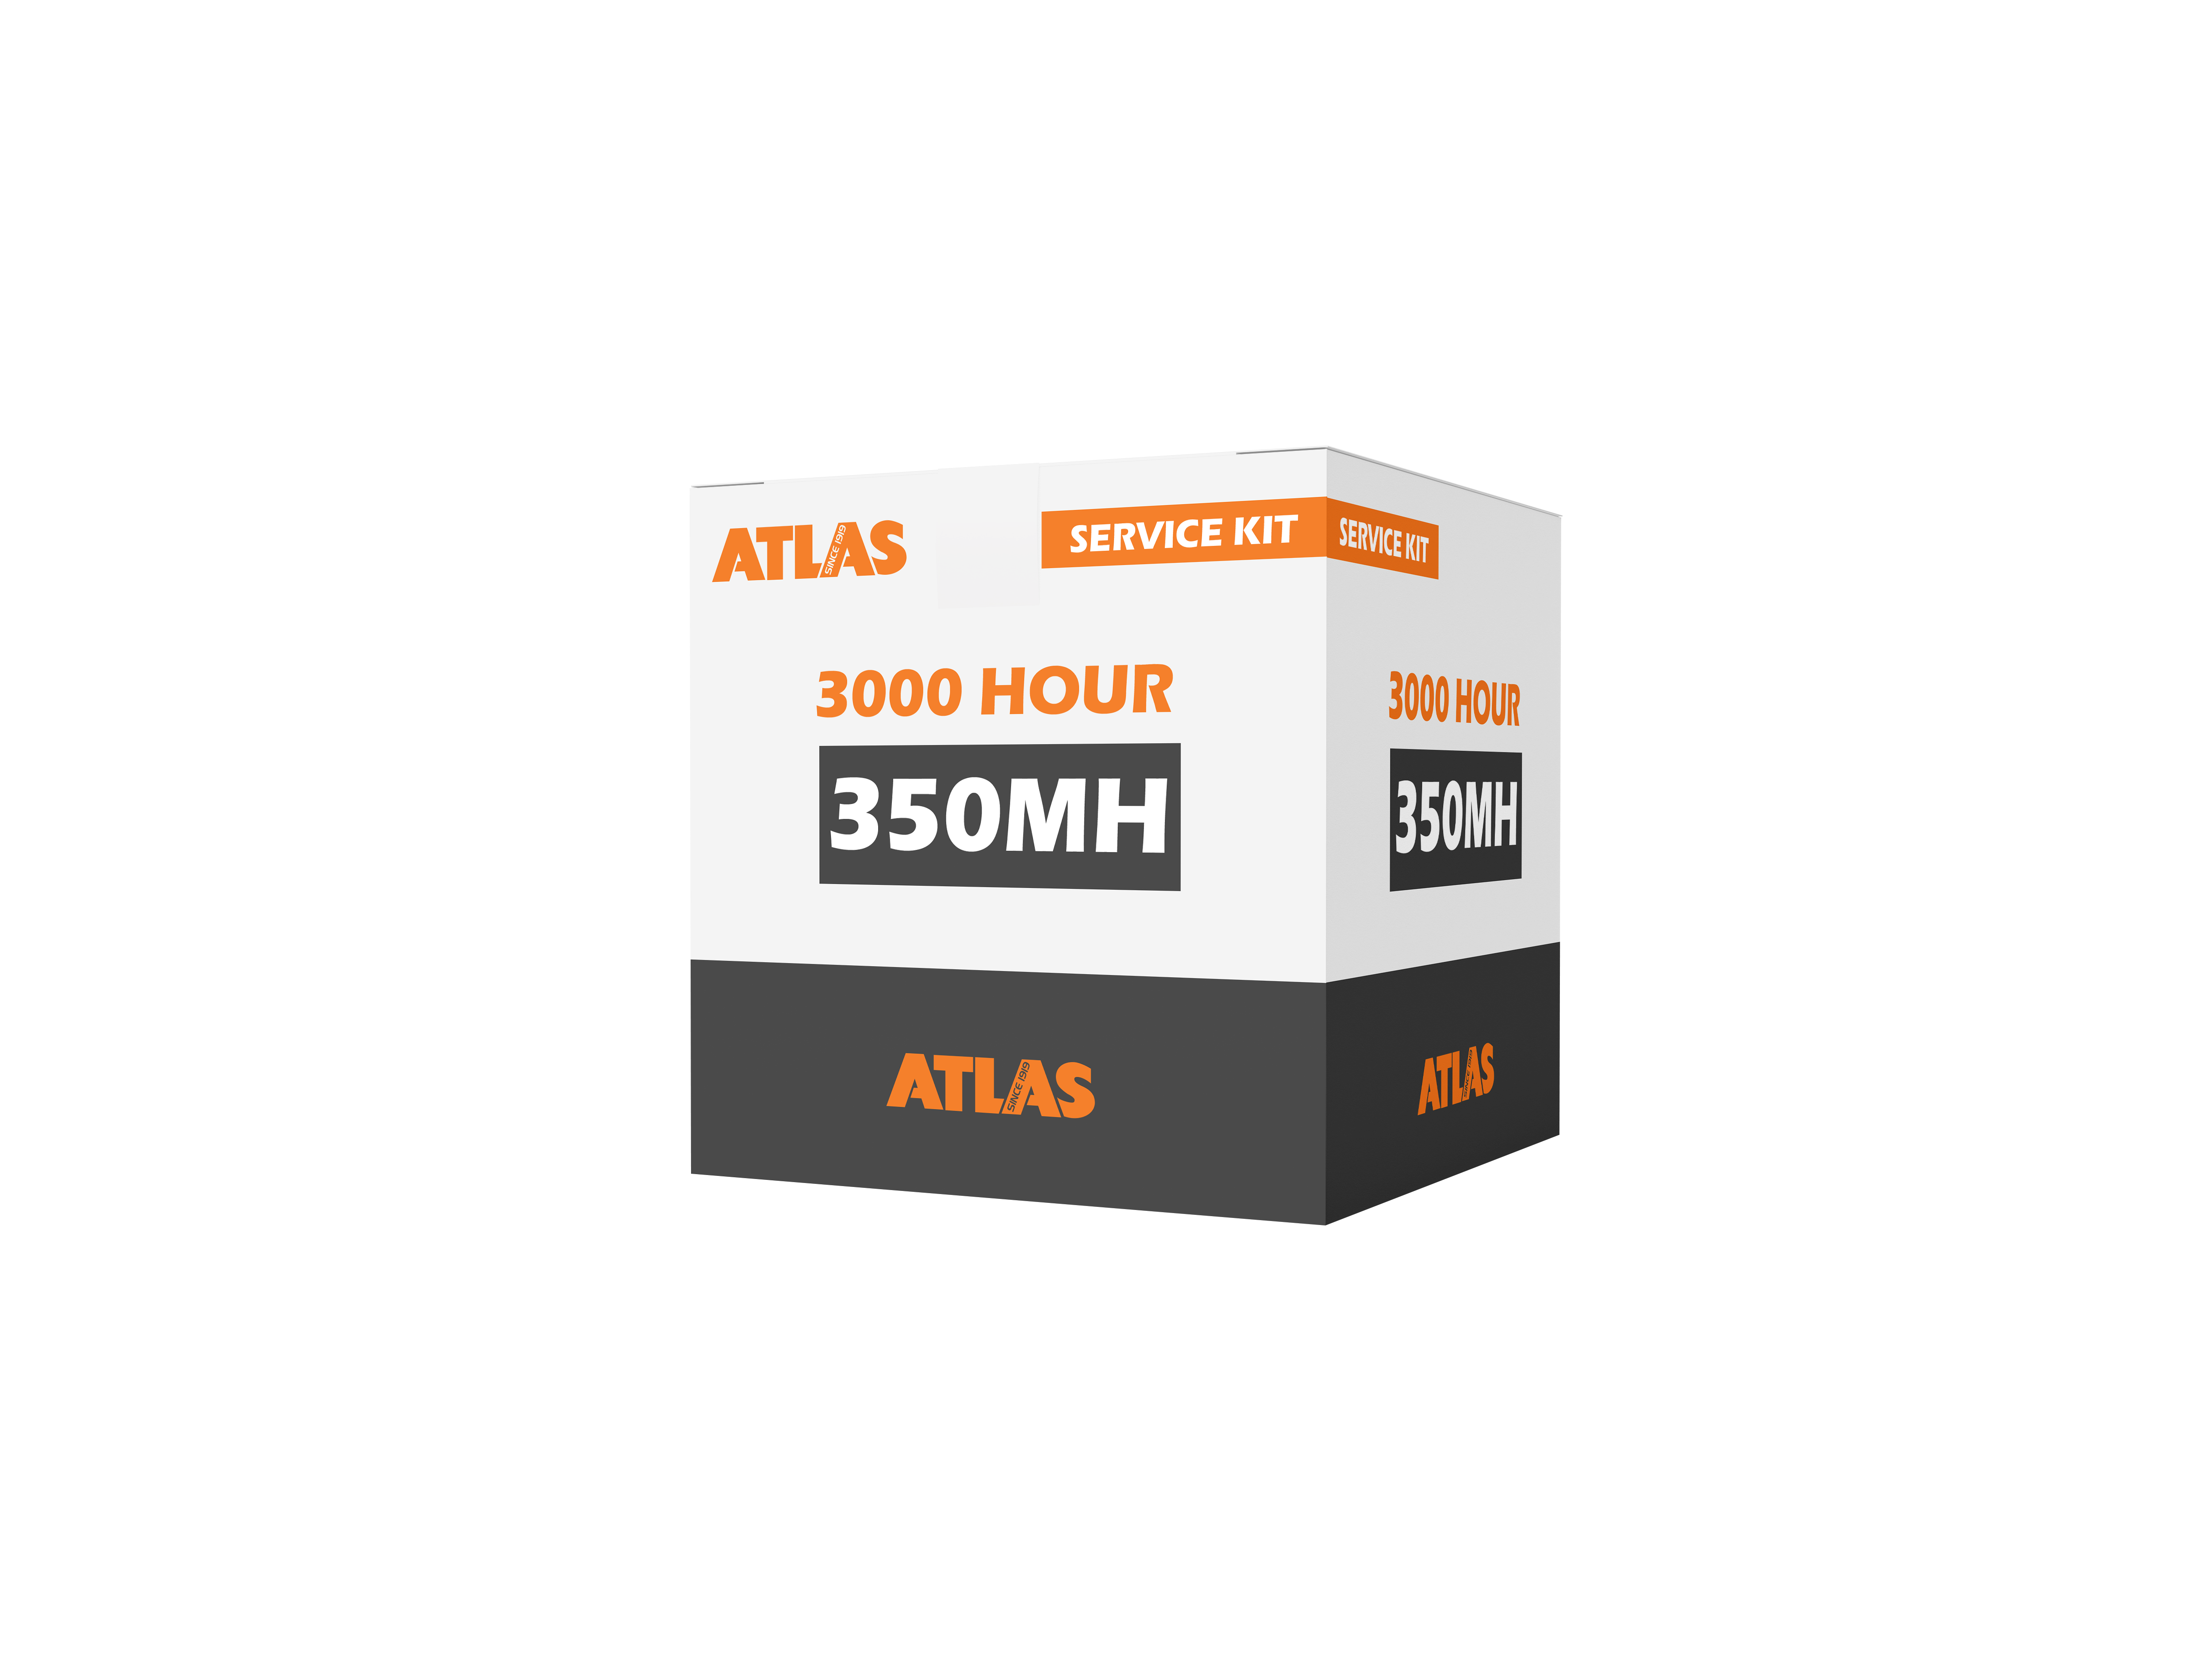 Atlas 350MH 3000 Hour Service Kit (352 series)